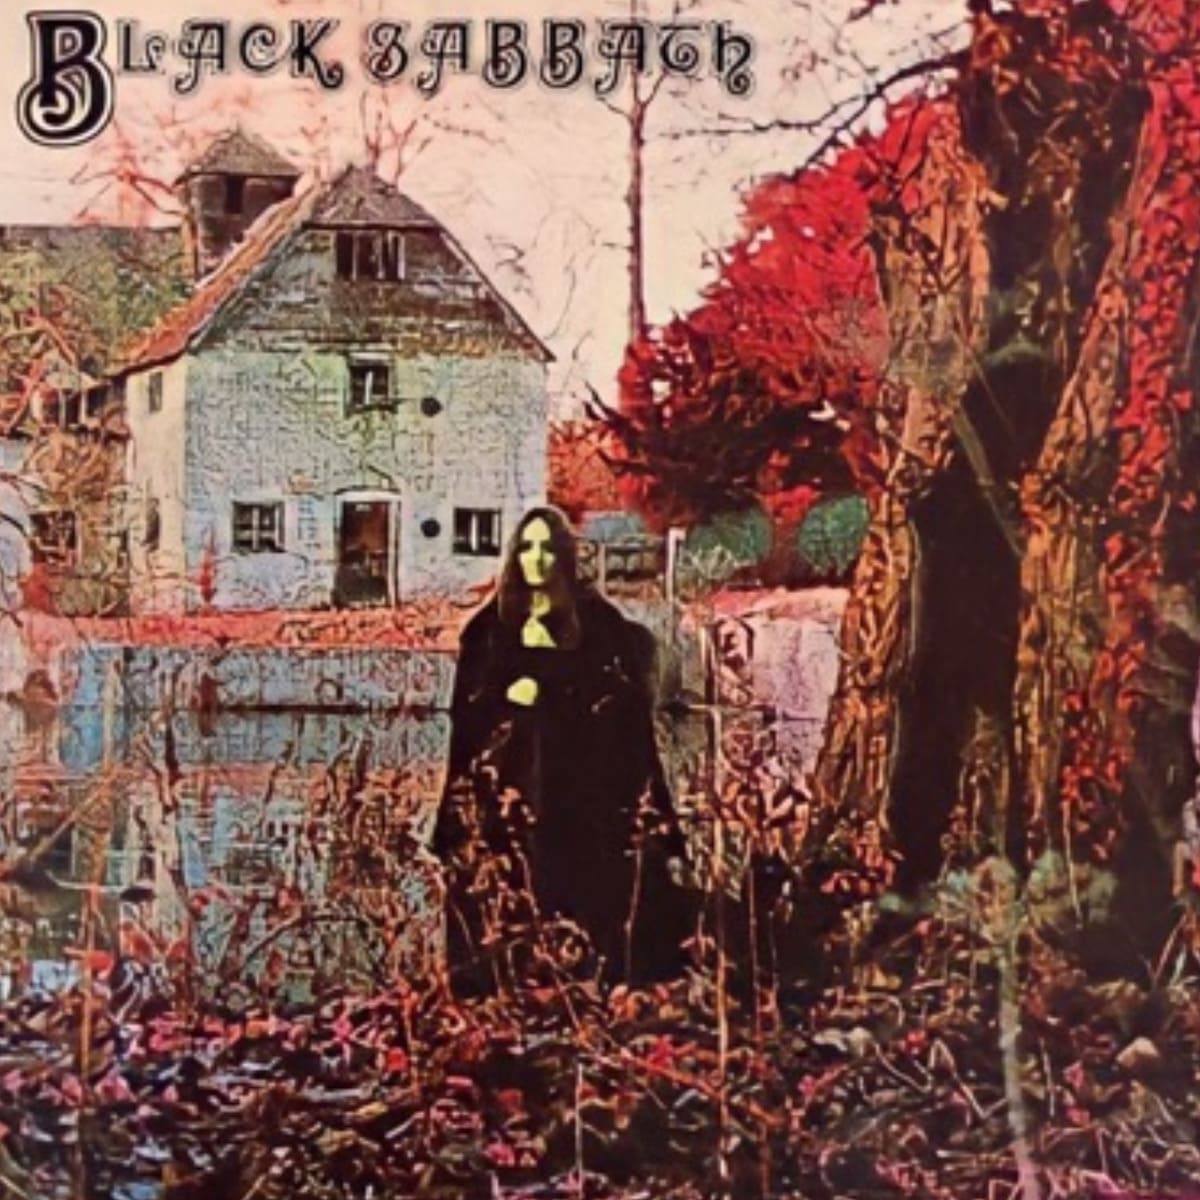 Black Sabbath" Albumcover der Band Black Sabbath